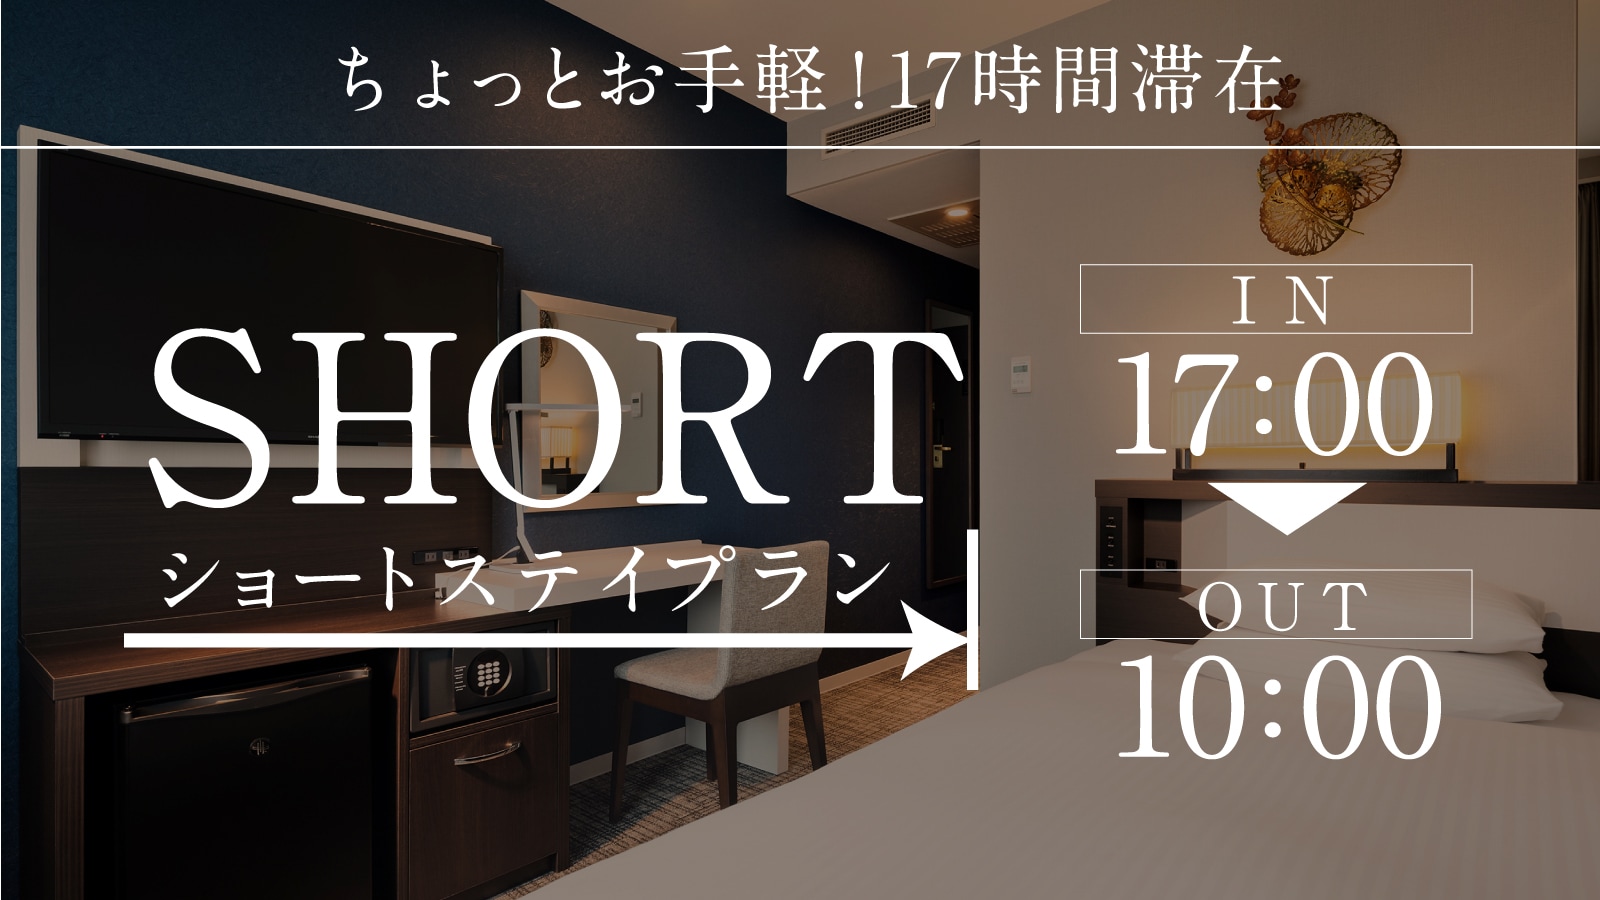 short stay